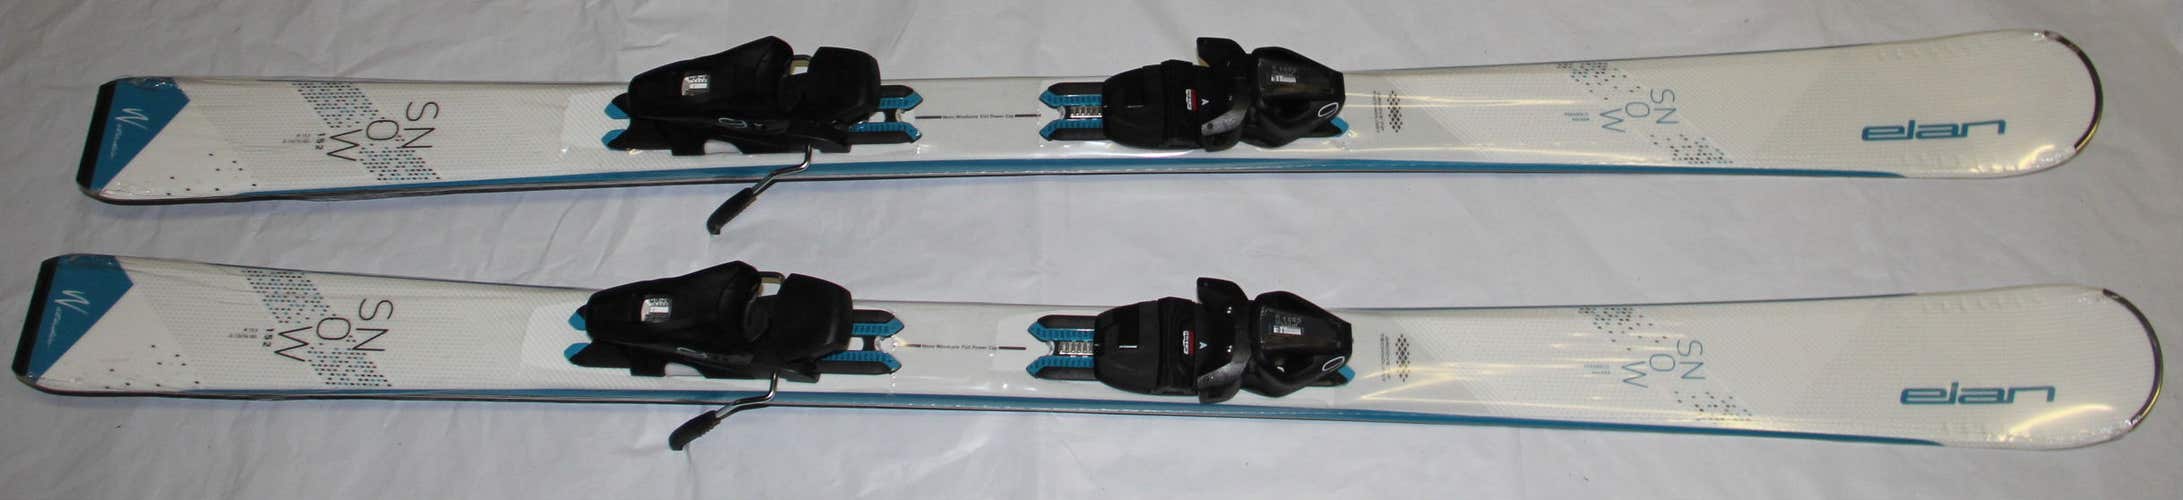 NEW 2023 Elan skis Snow White Skis women's + EL9.0 Bindings size adjustable 146cm